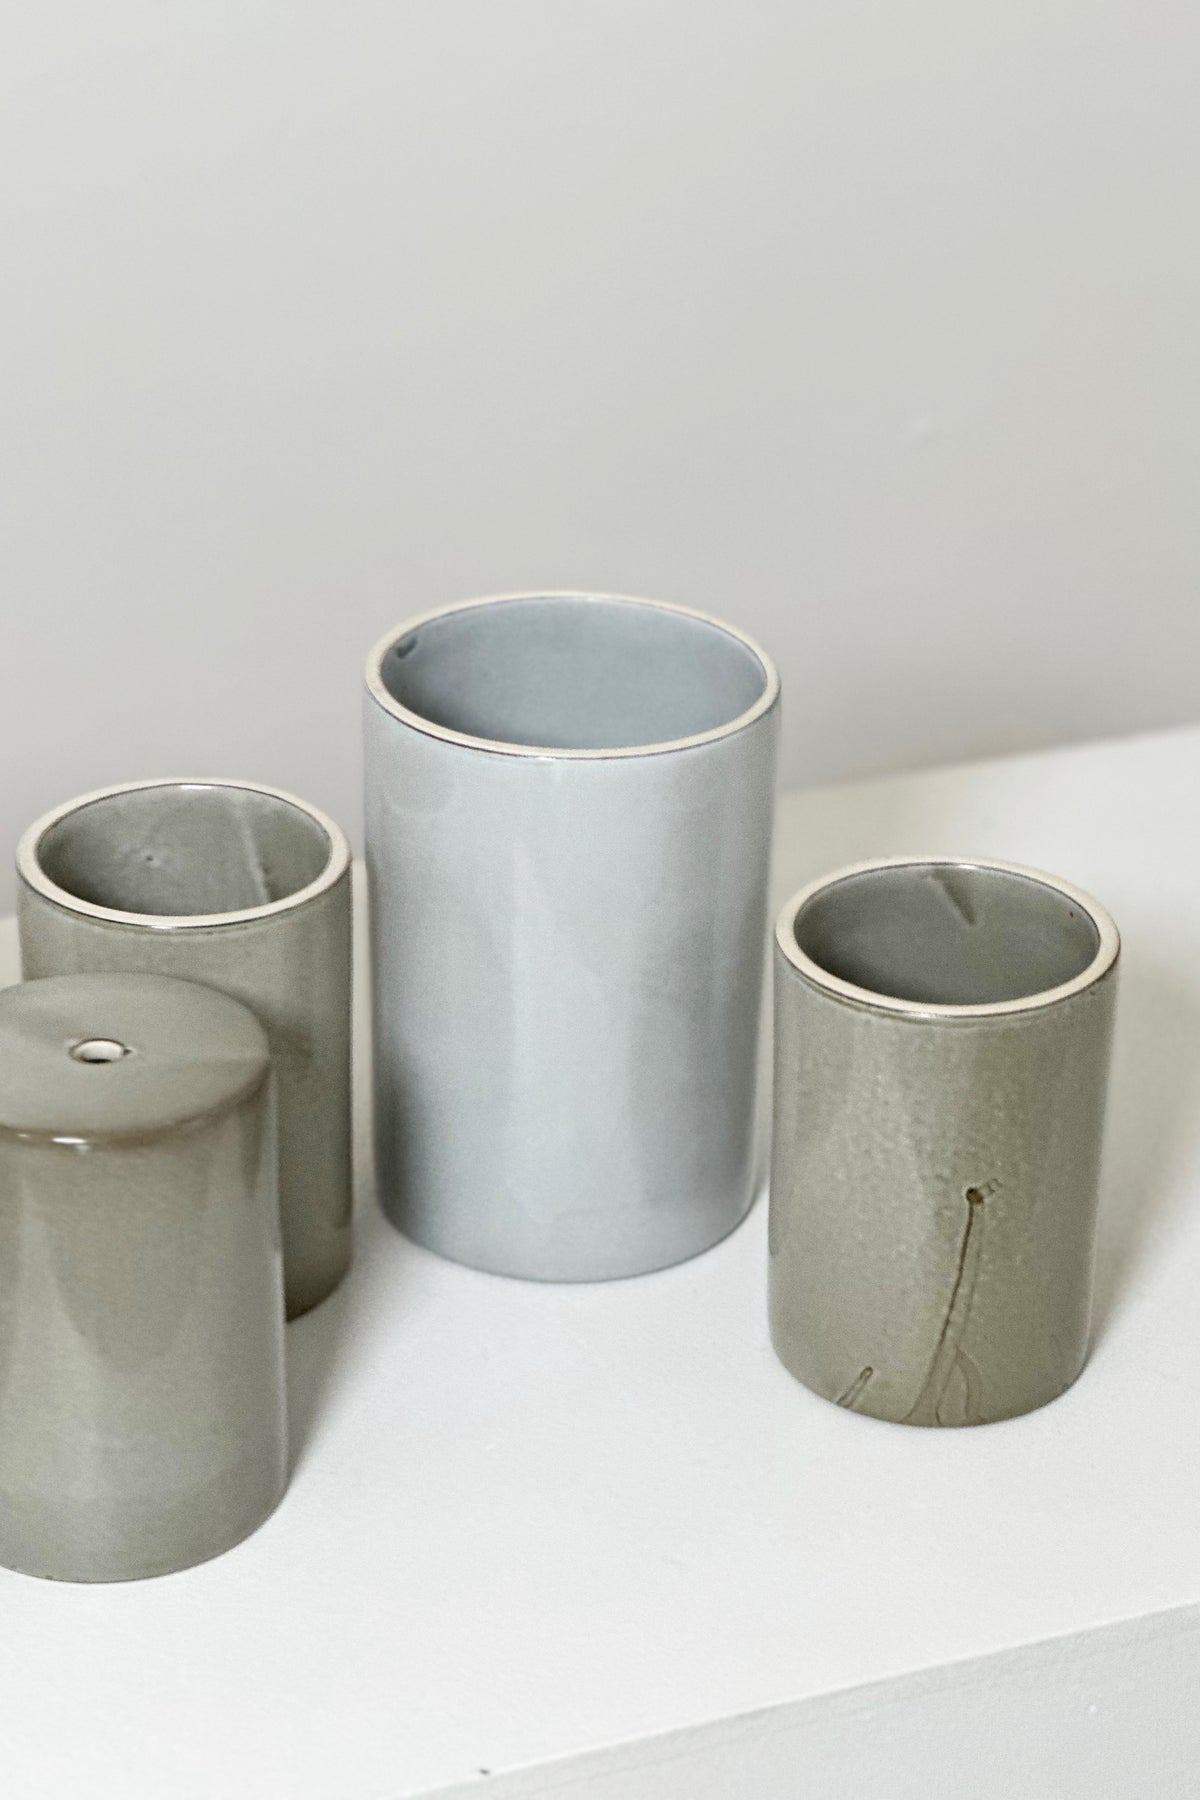 Small Ceramic Pendant Bell Light / Saltbush